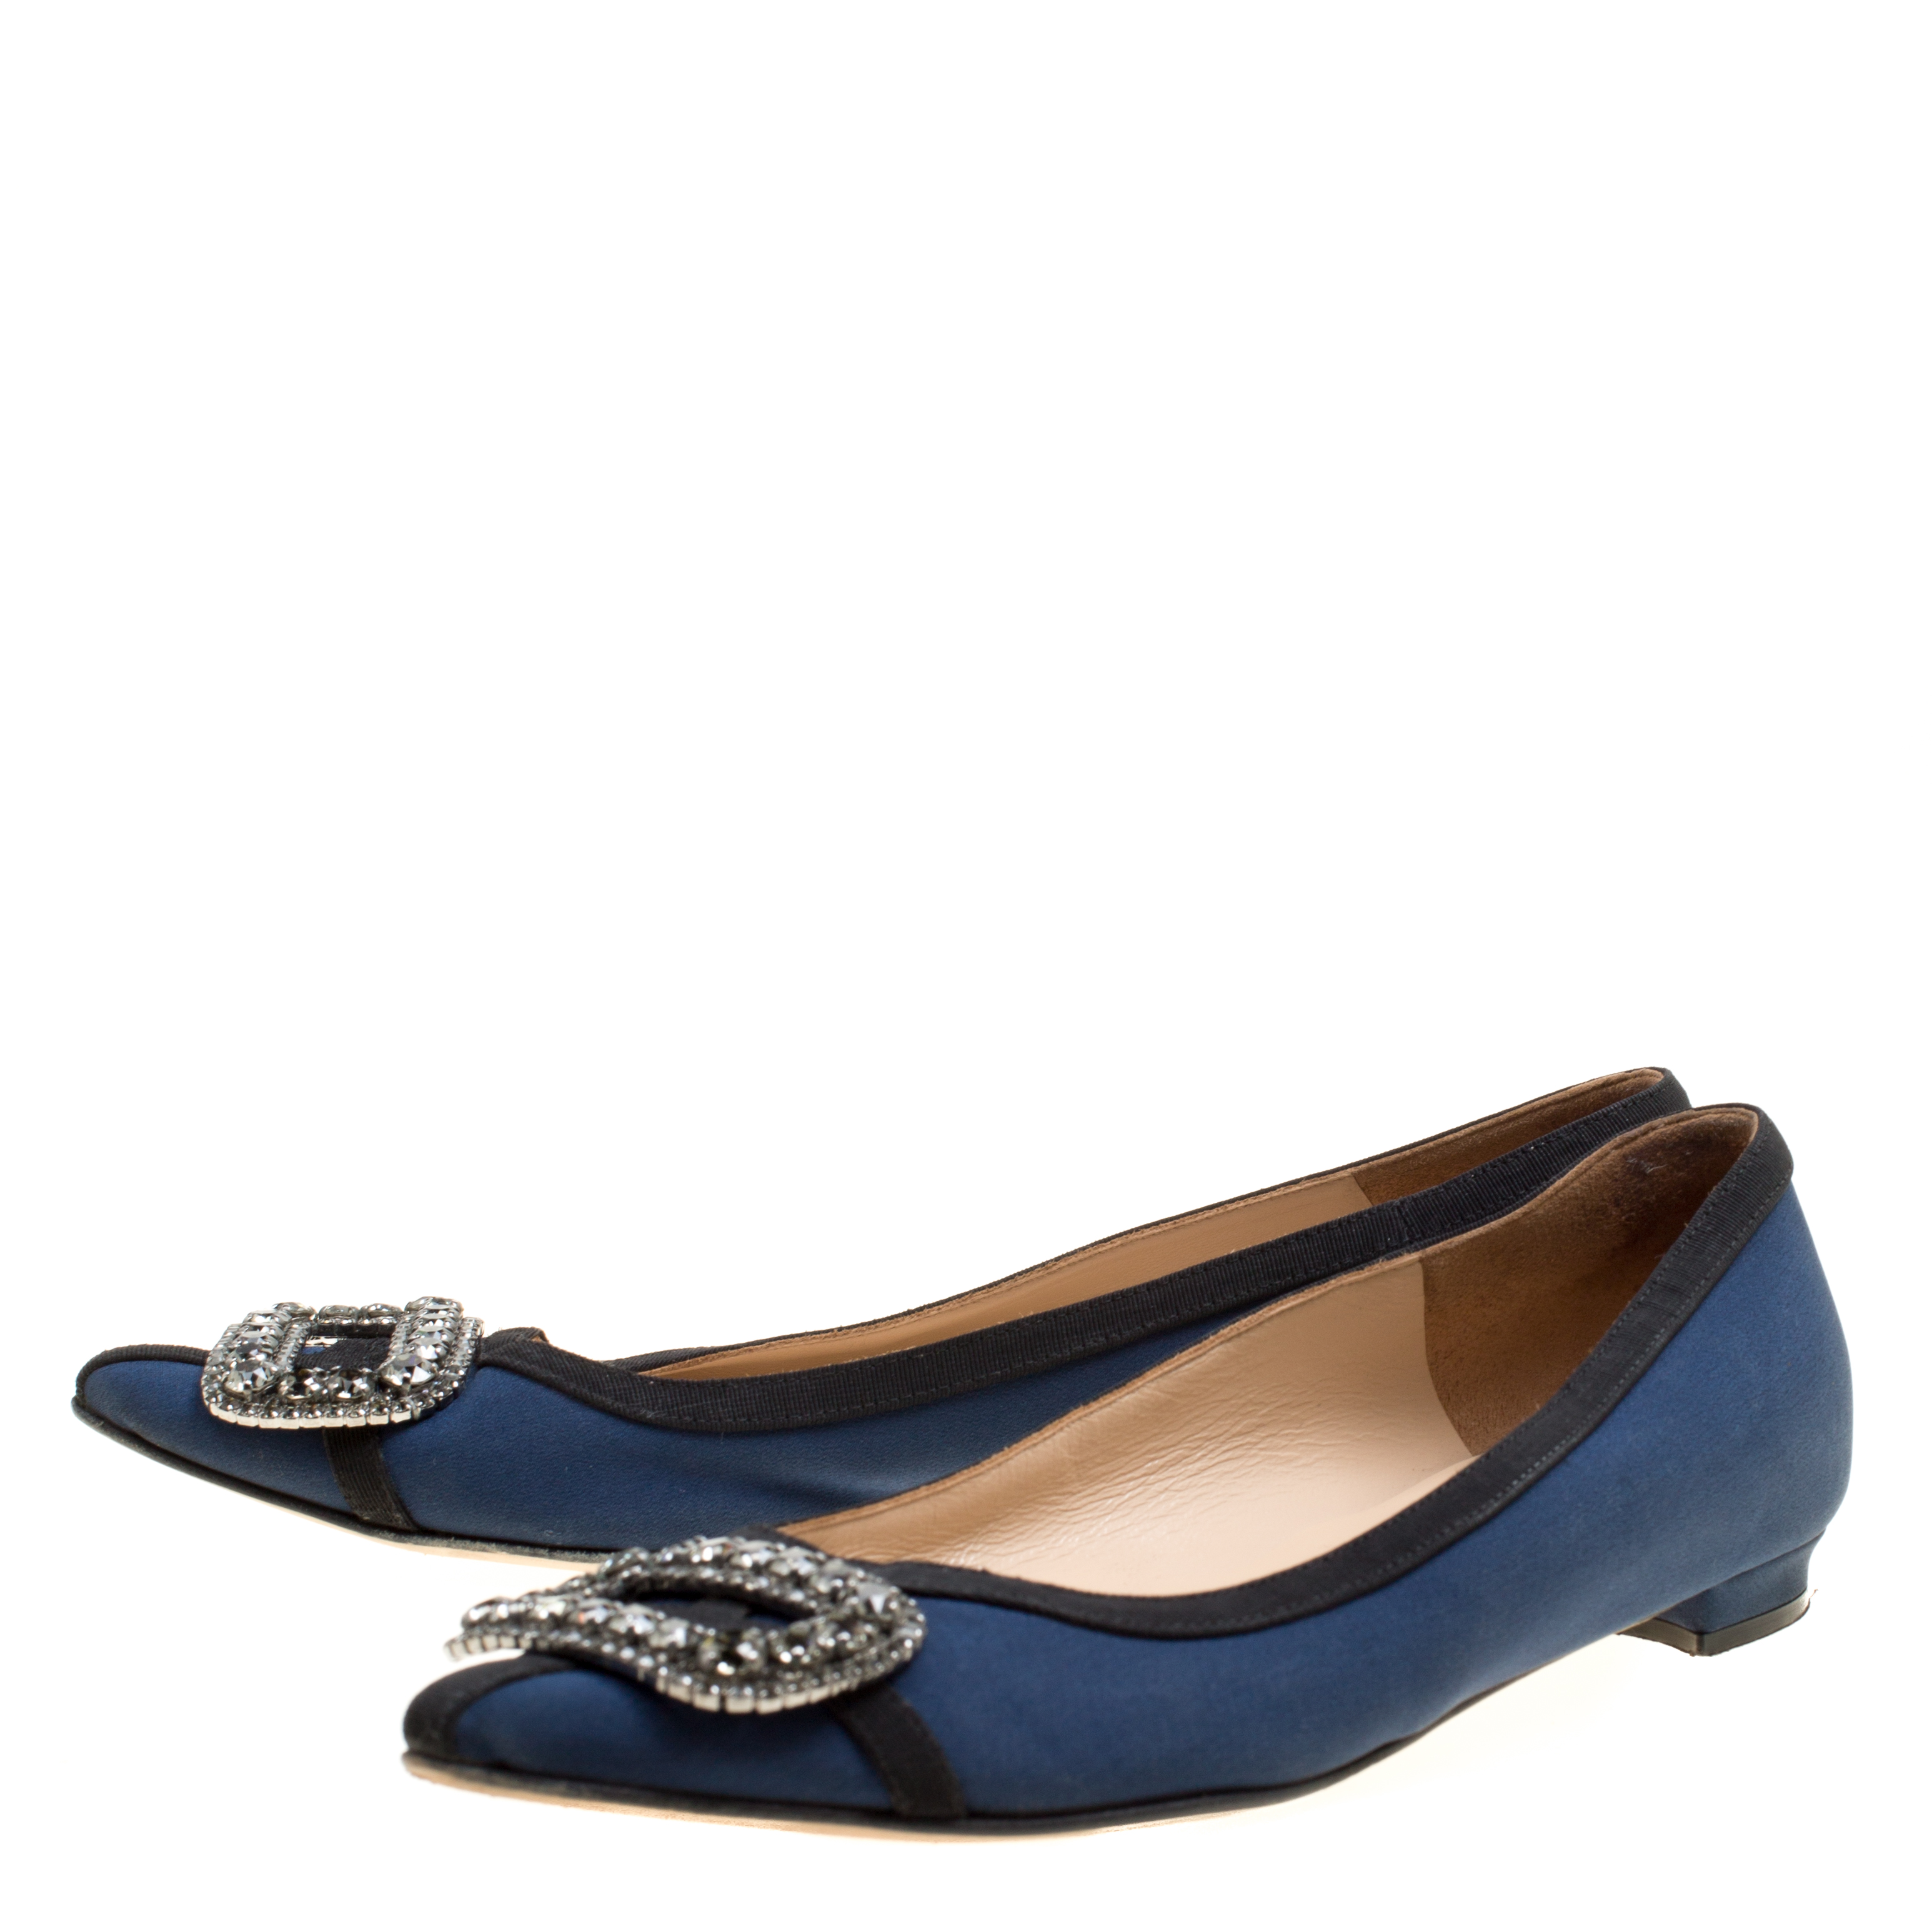 Manolo Blahnik Navy Blue Satin Gotrian Crystal Embellished Pointed Toe Flats Size 36.5